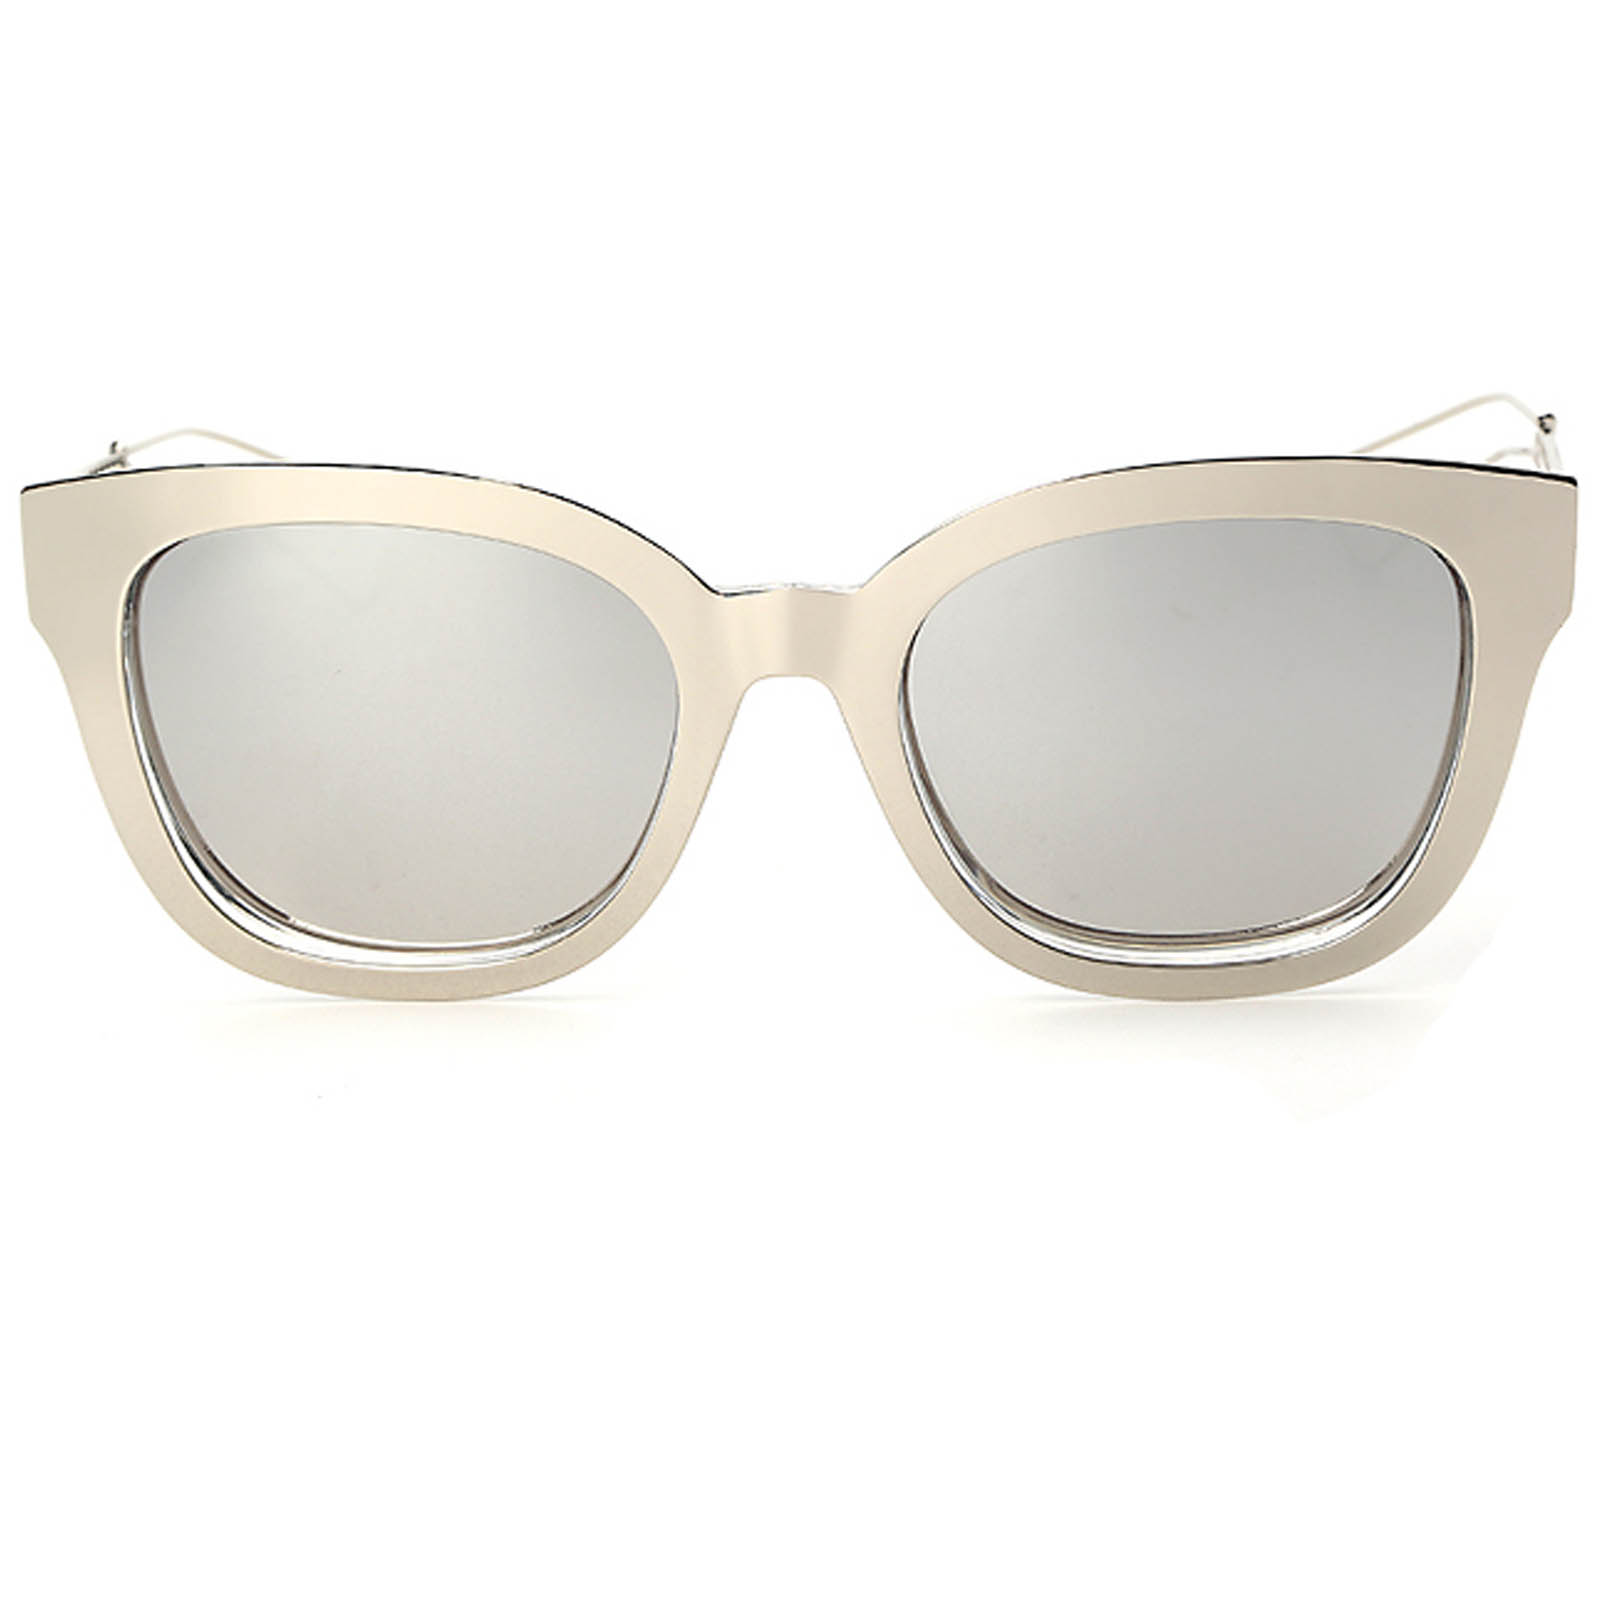 OWL ® 005 C6 Sunglasses Women’s Men’s Metal Silver Frame Silver Lens ...